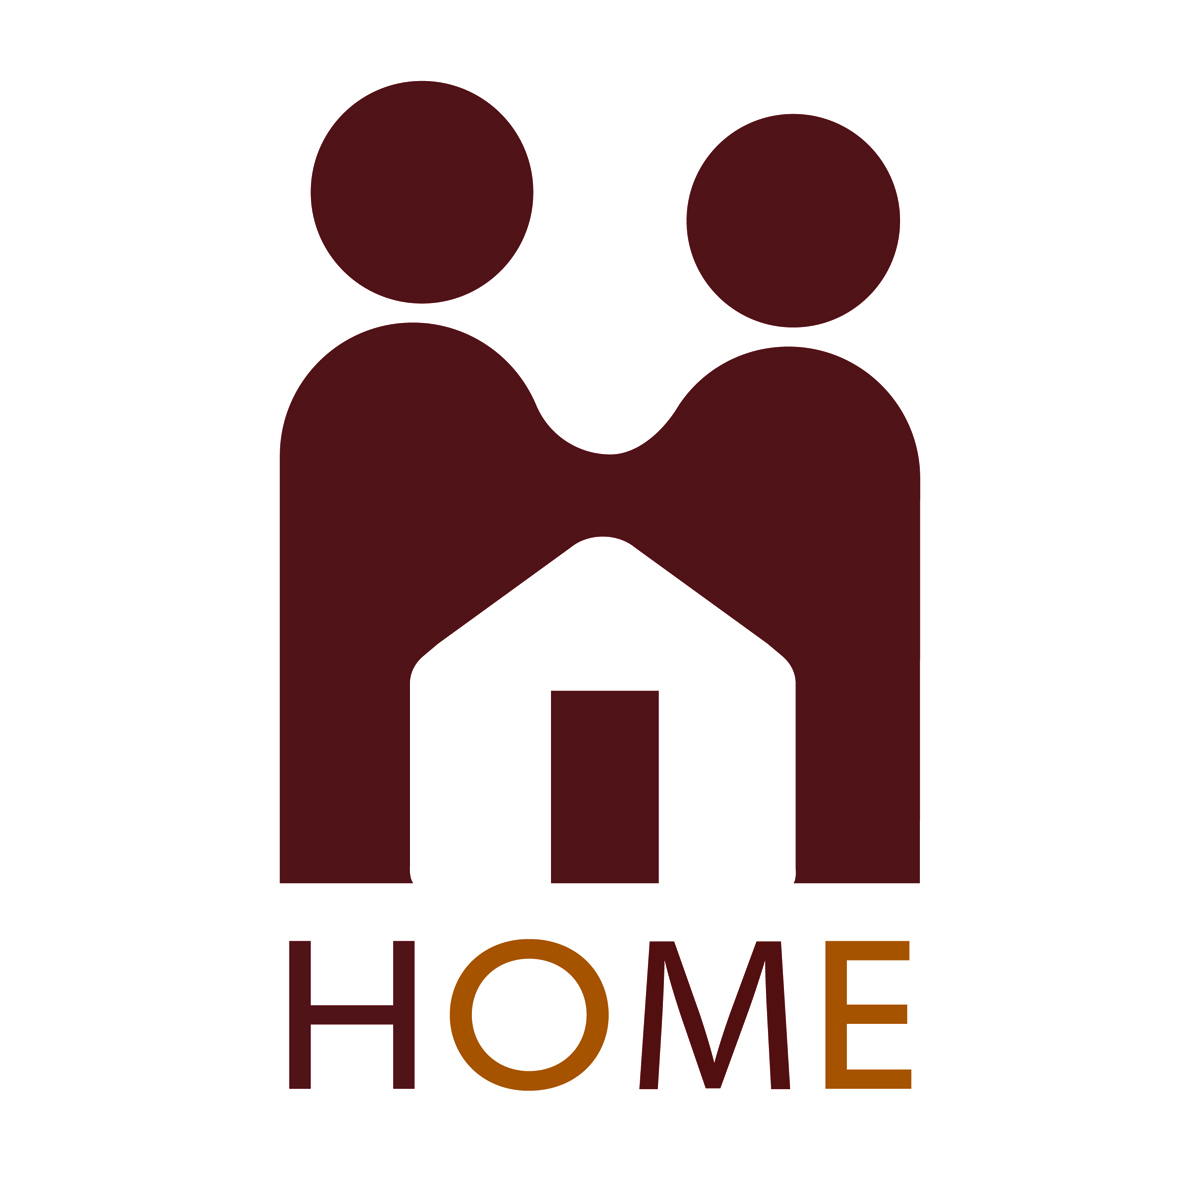 HOME-square-logo-hi res.jpg